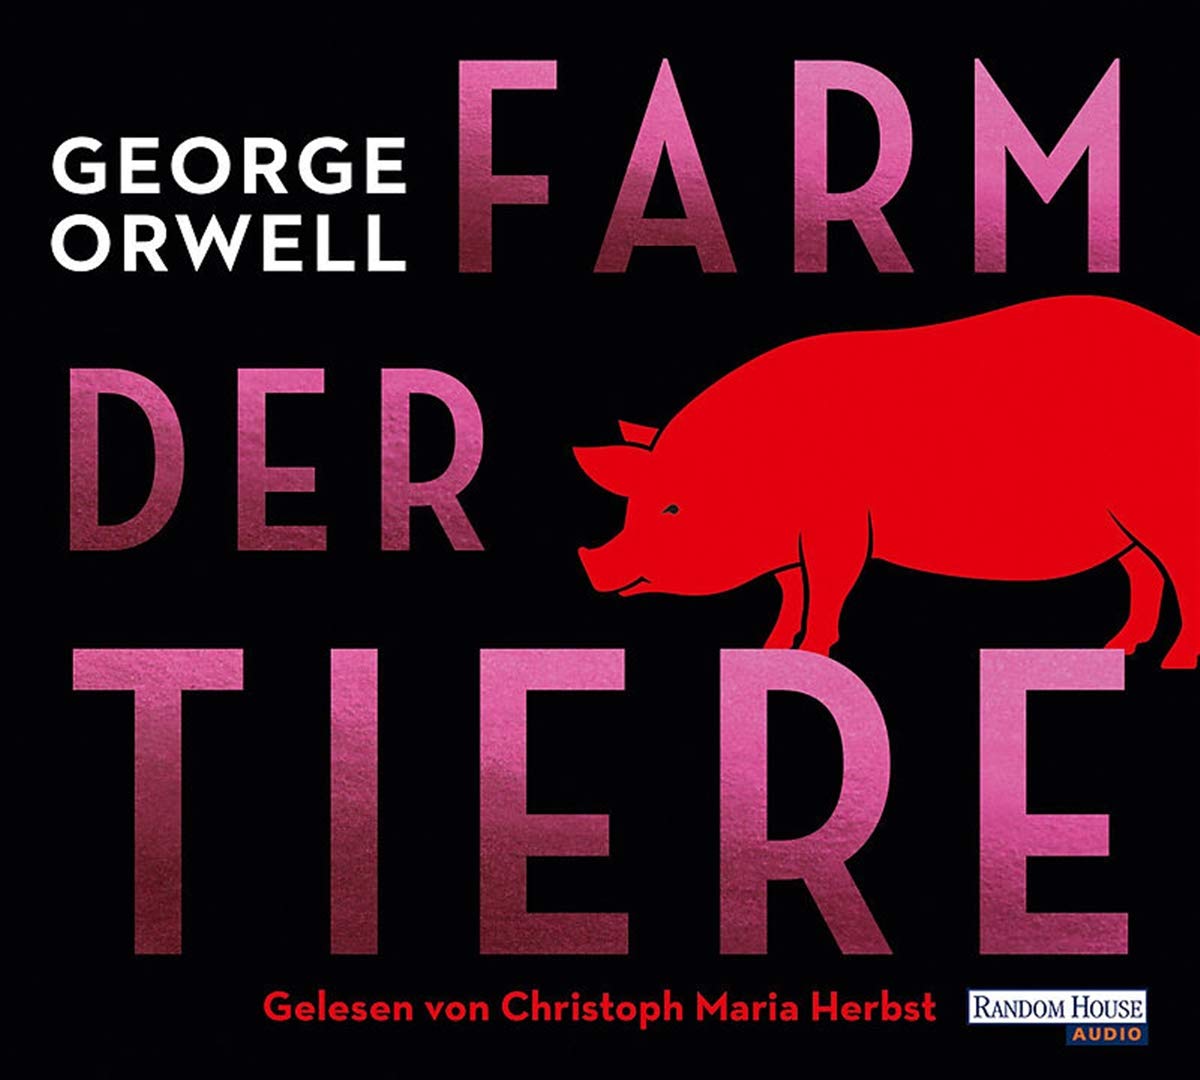 Orwell, George - Farm der Tiere